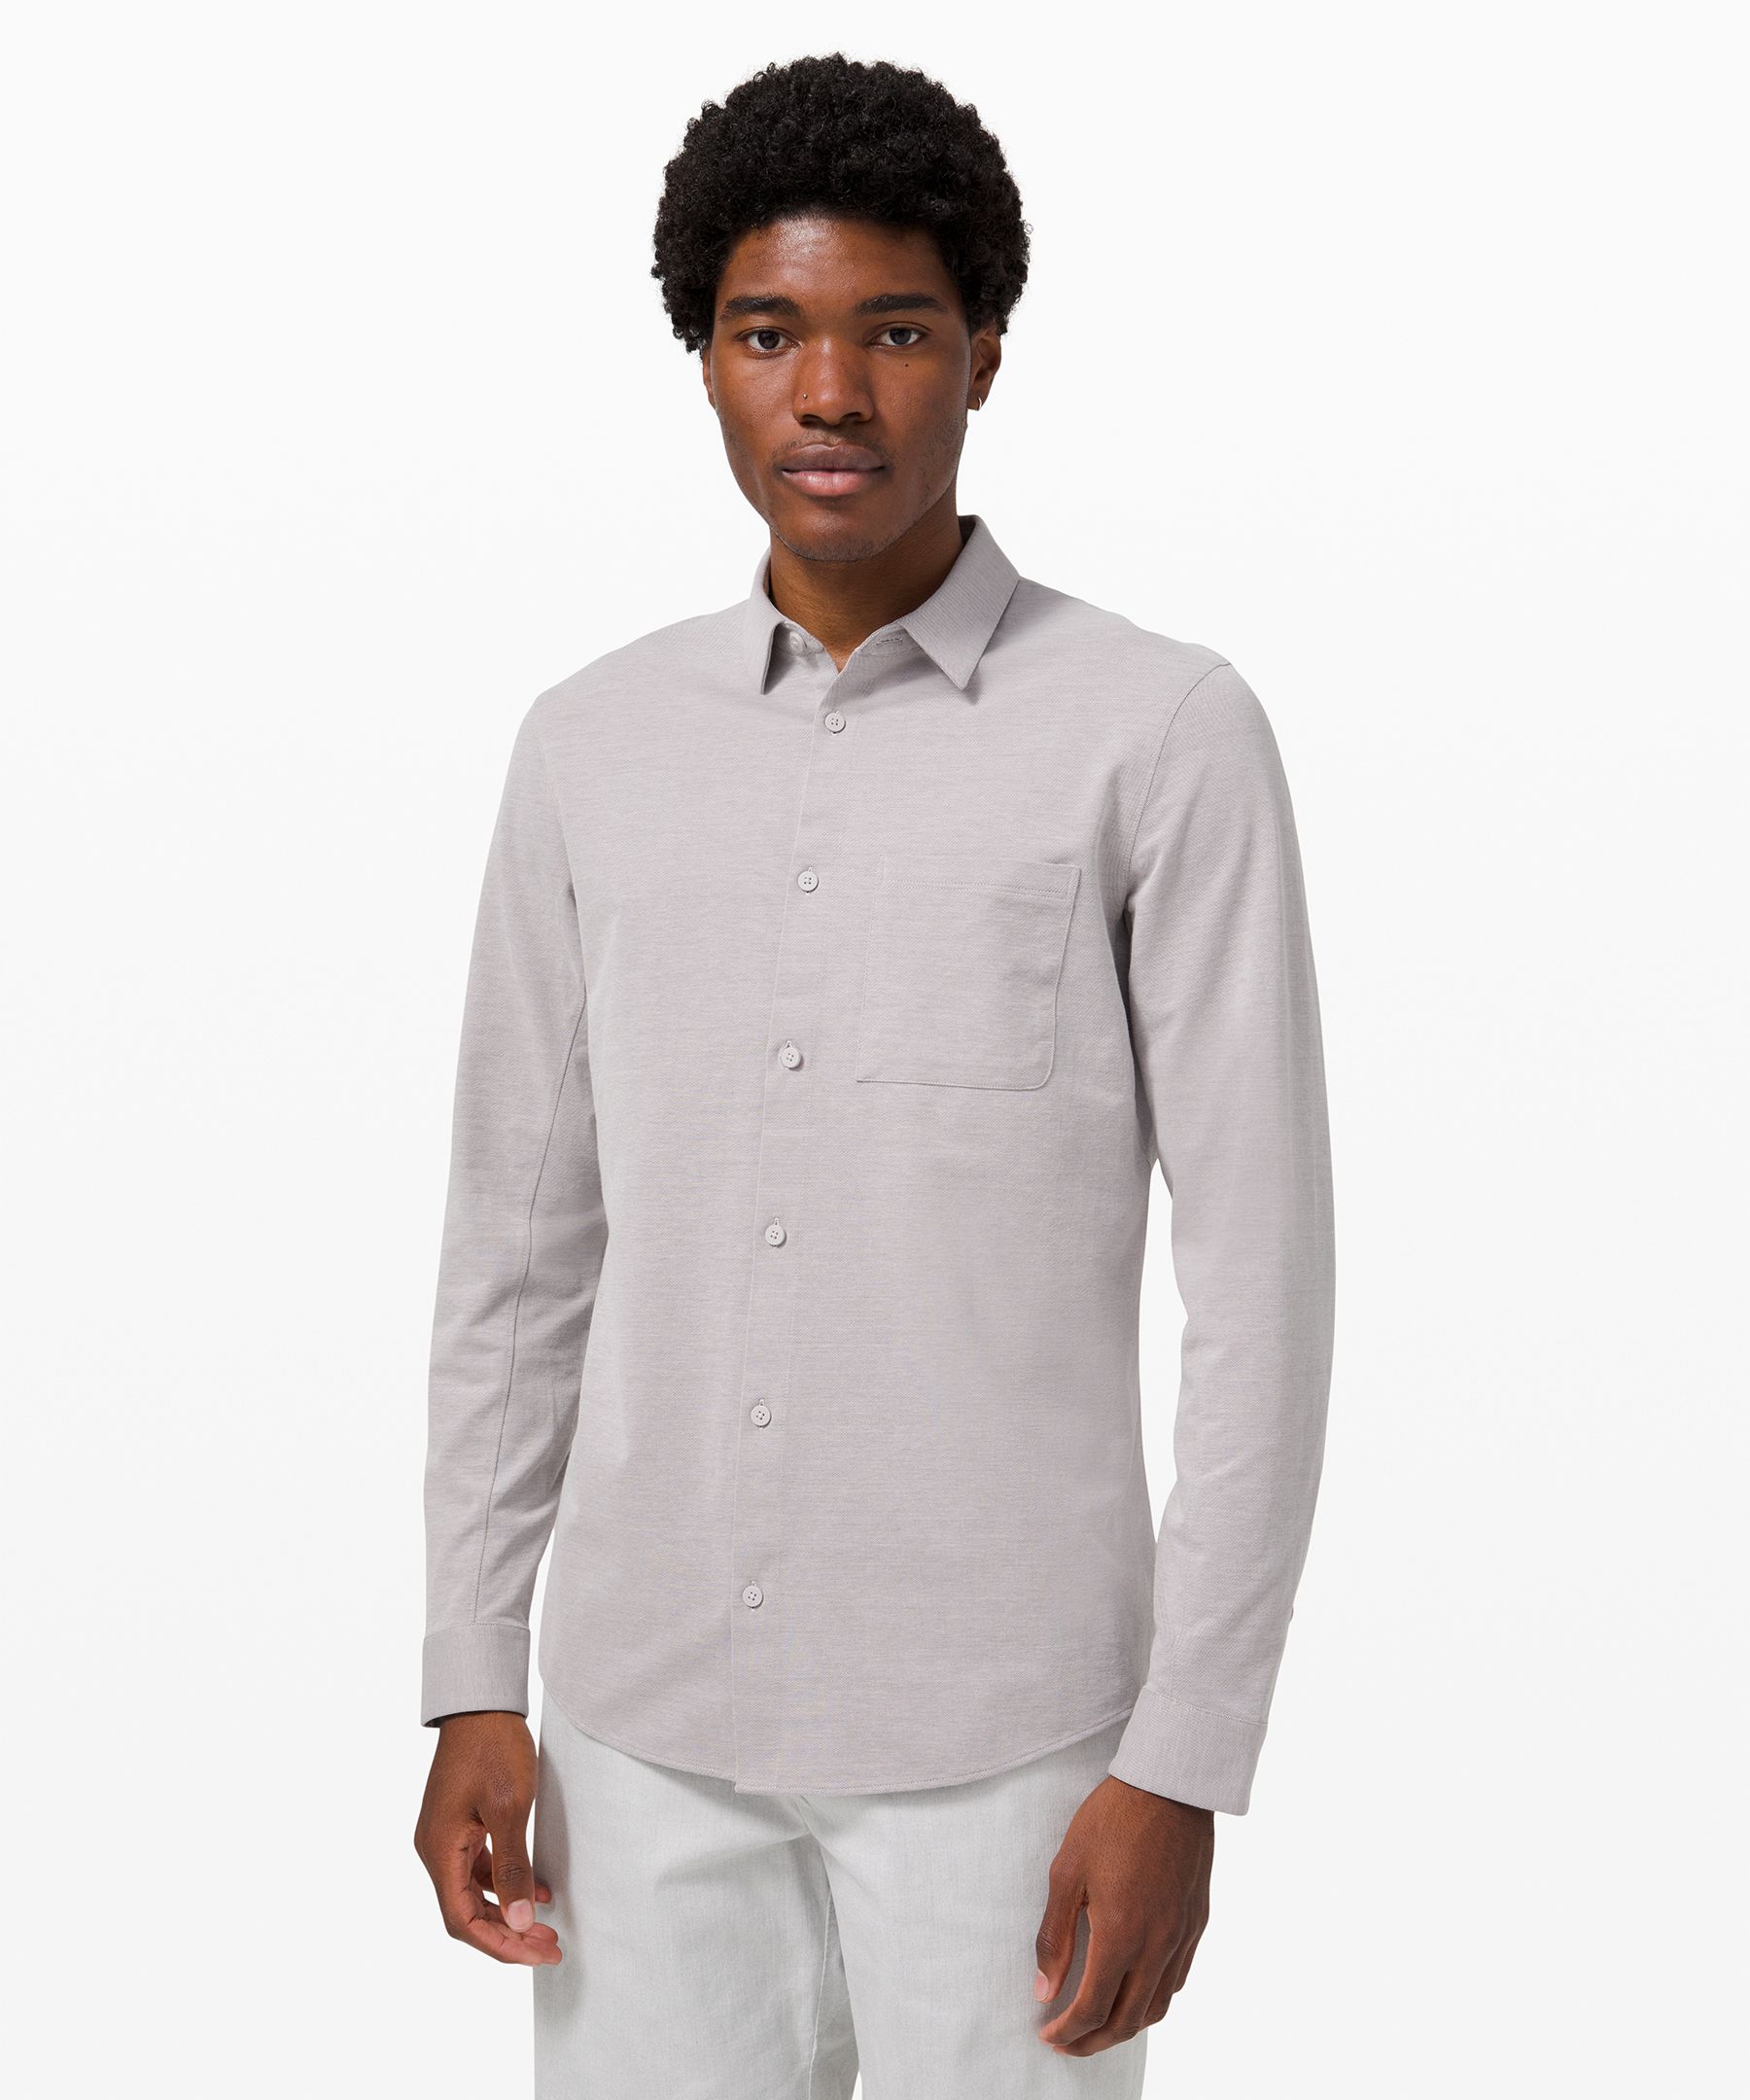 lululemon gray long sleeve shirt